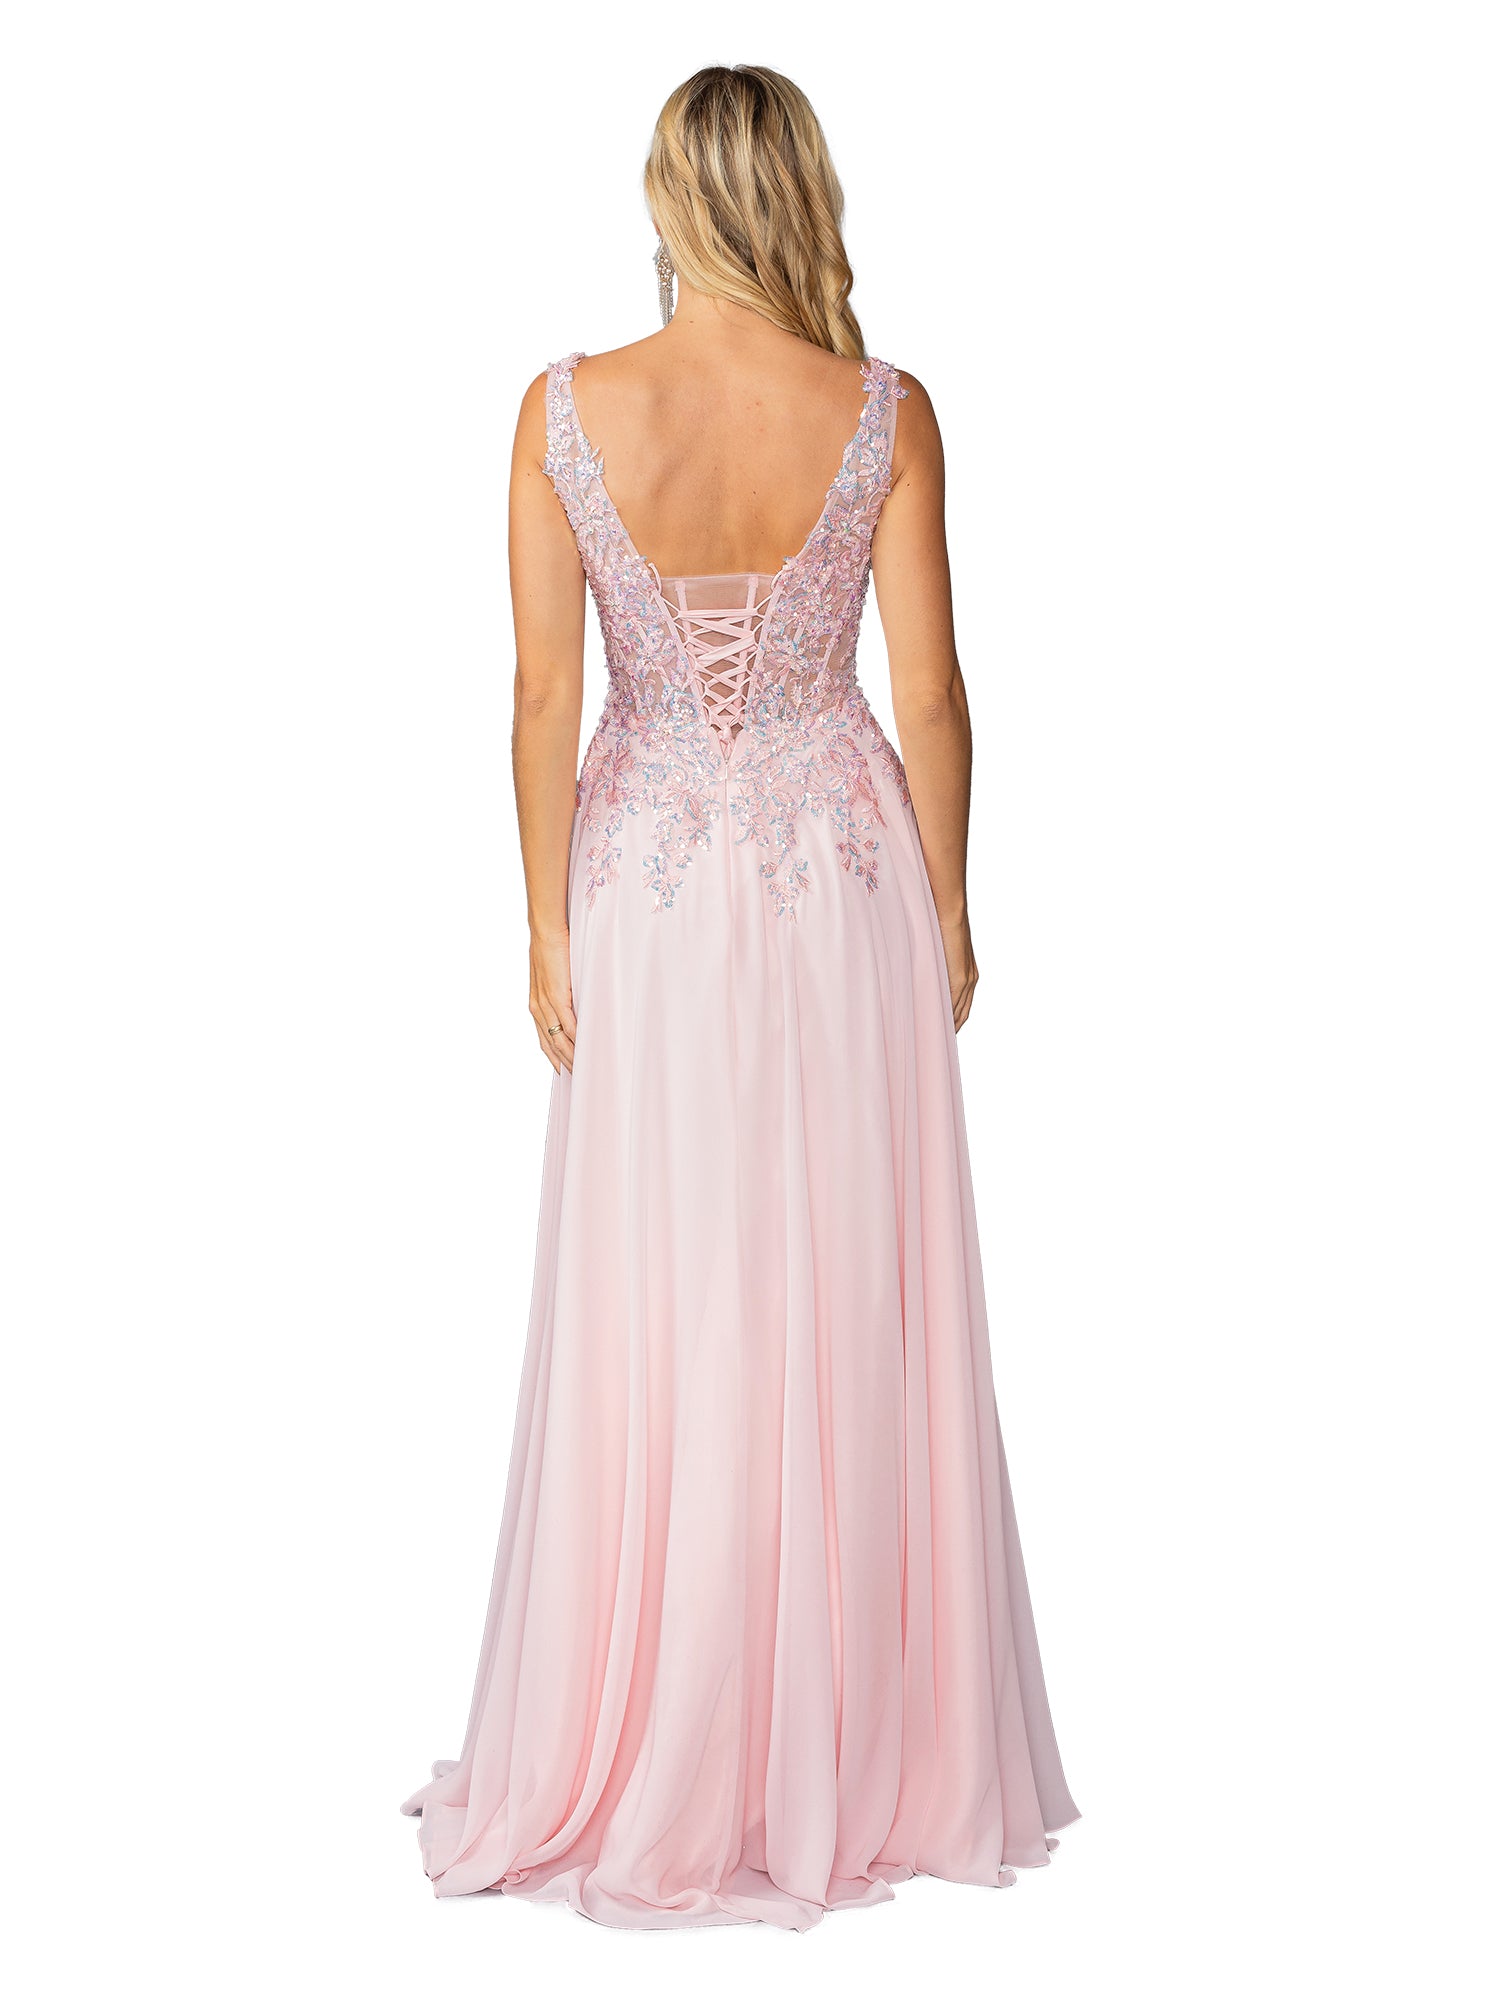 Long Prom Dress 4446 by Dancing Queen